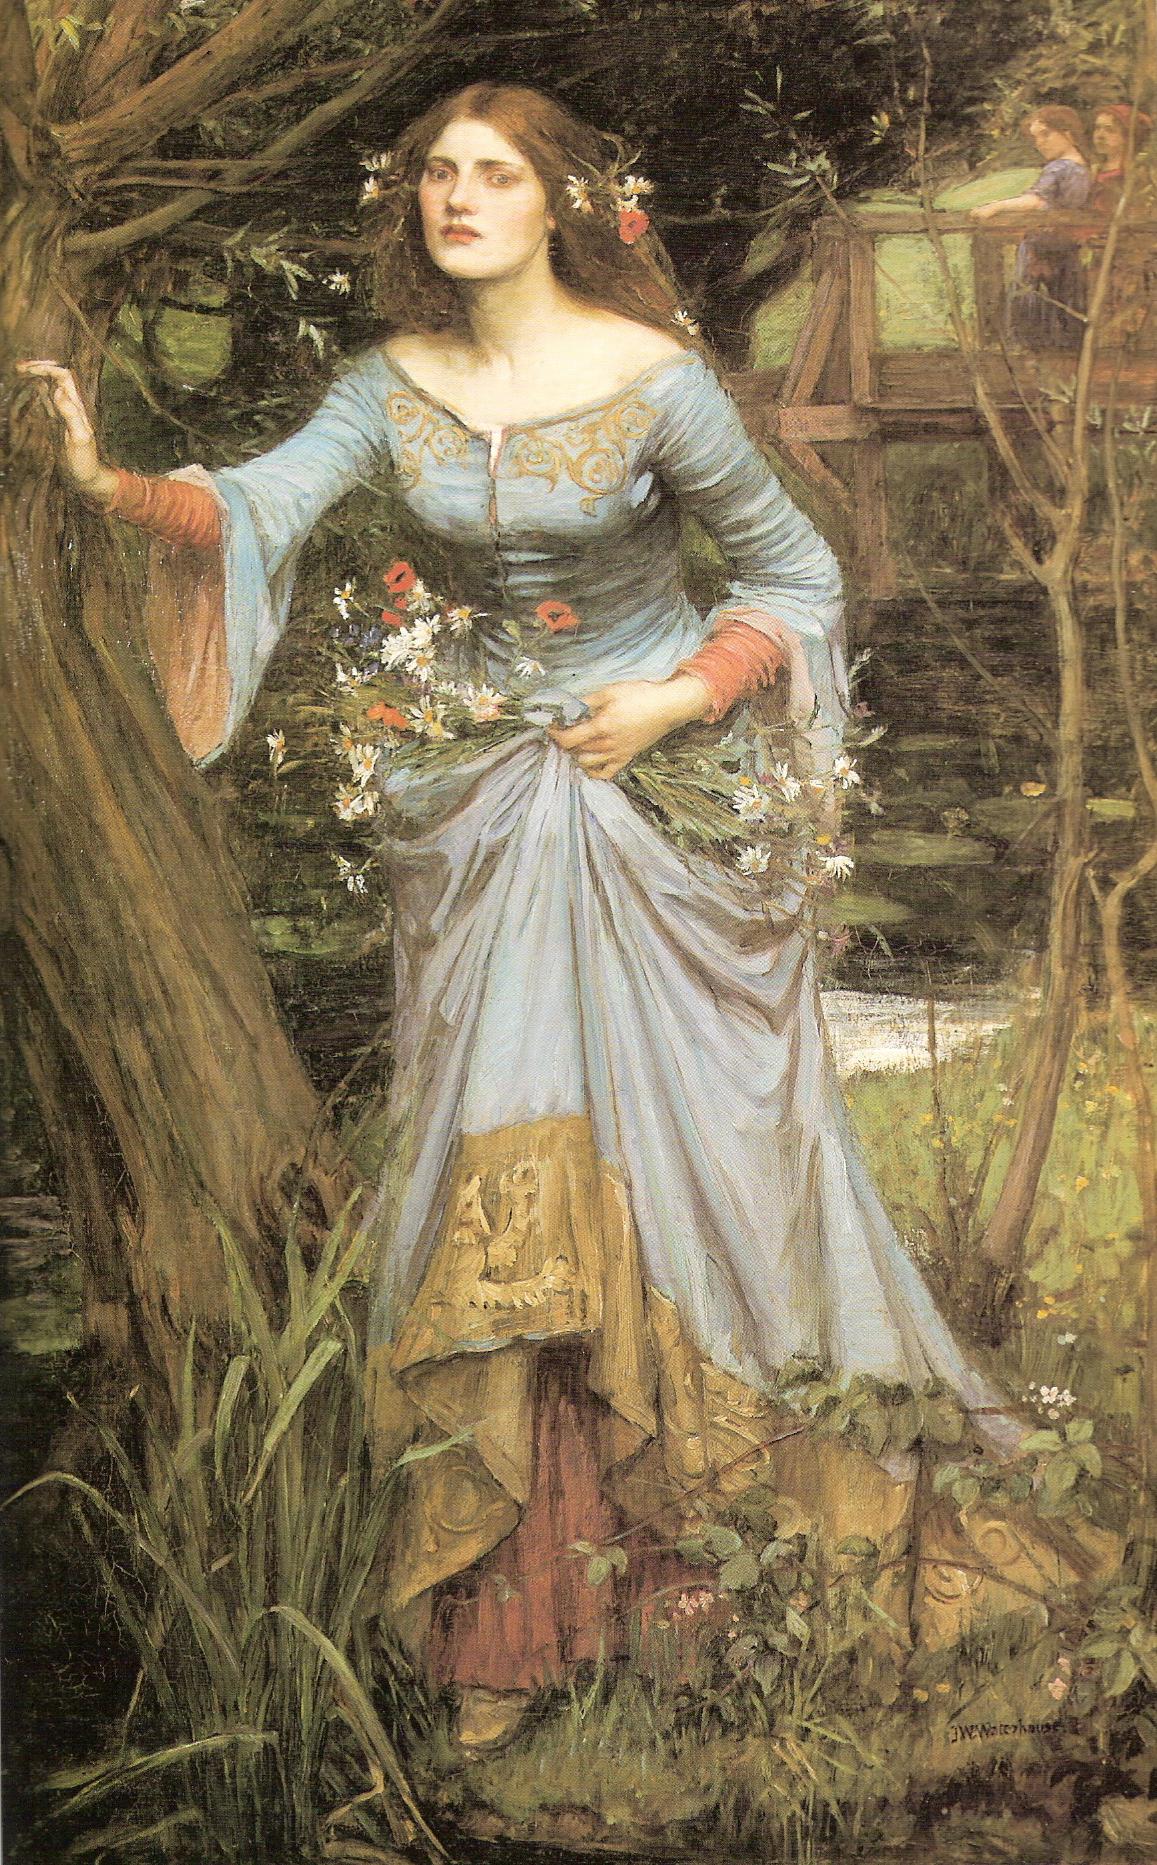 Ophelia, 1910 - John William Waterhouse - WikiArt.org